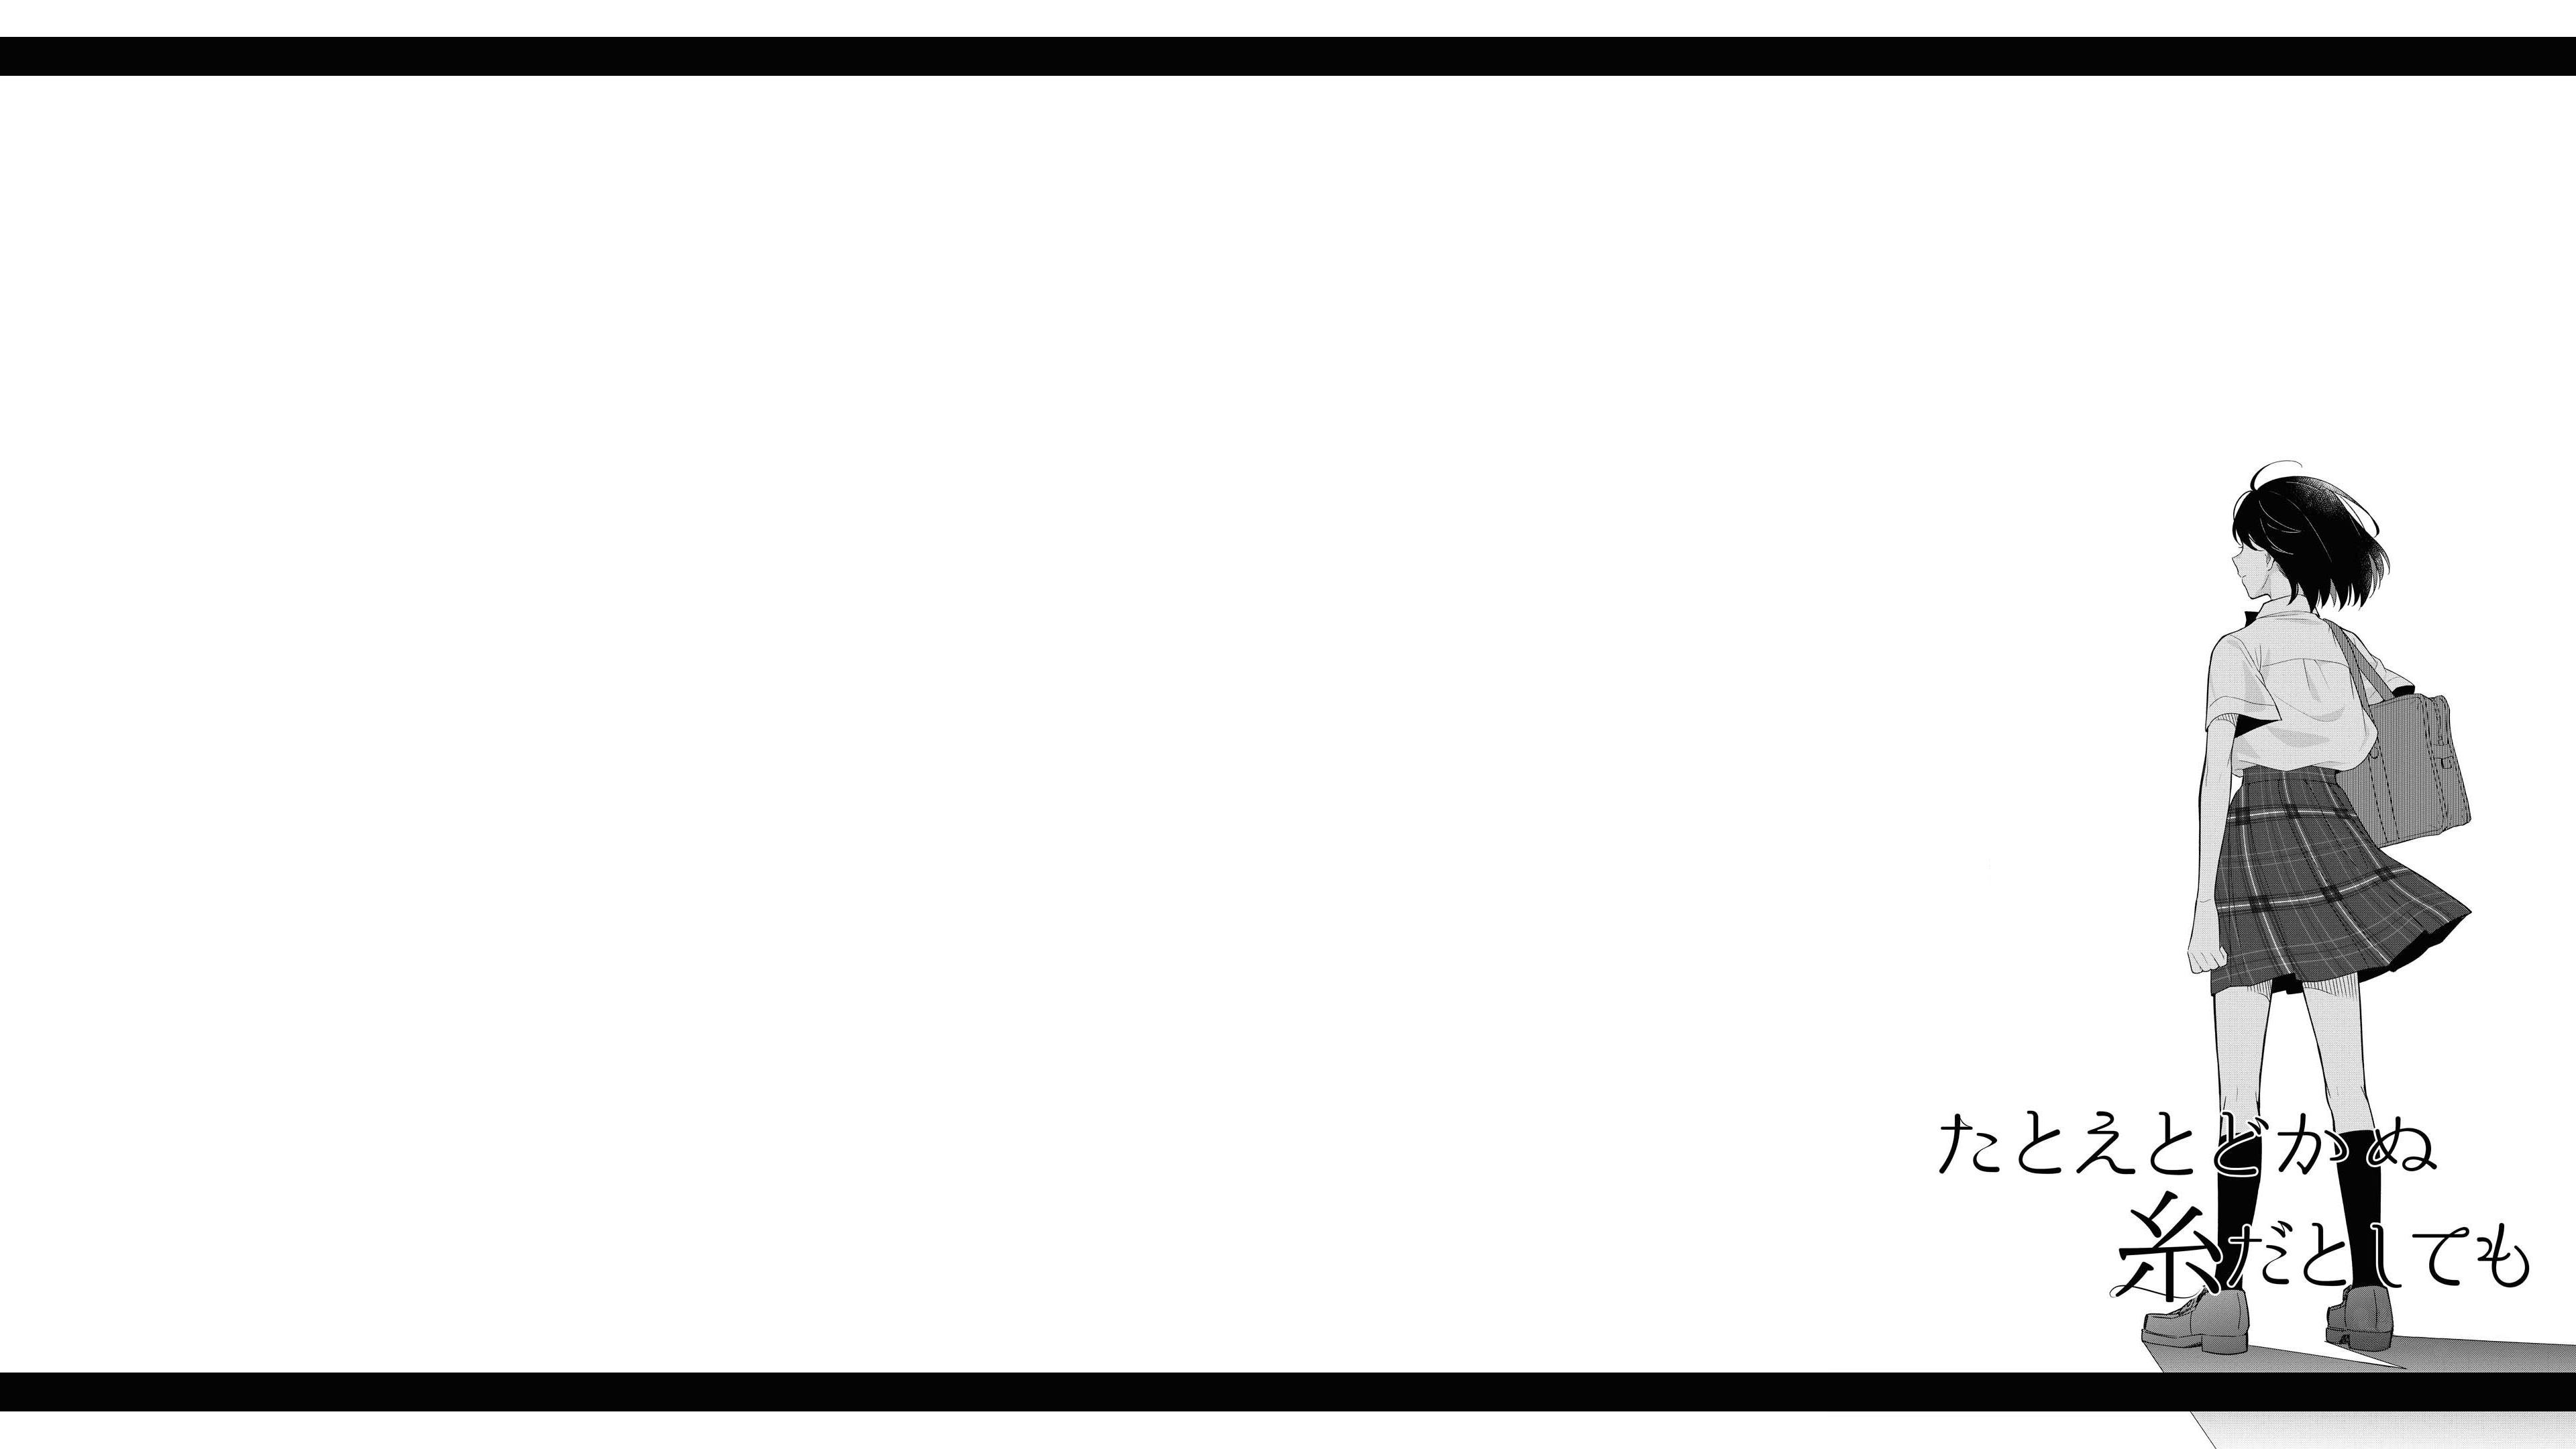 Monochrome Minimalism Japanese Anime Girls Skirt Schoolgirl School Bag White Shirt Short Sleeves Kne 3840x2160